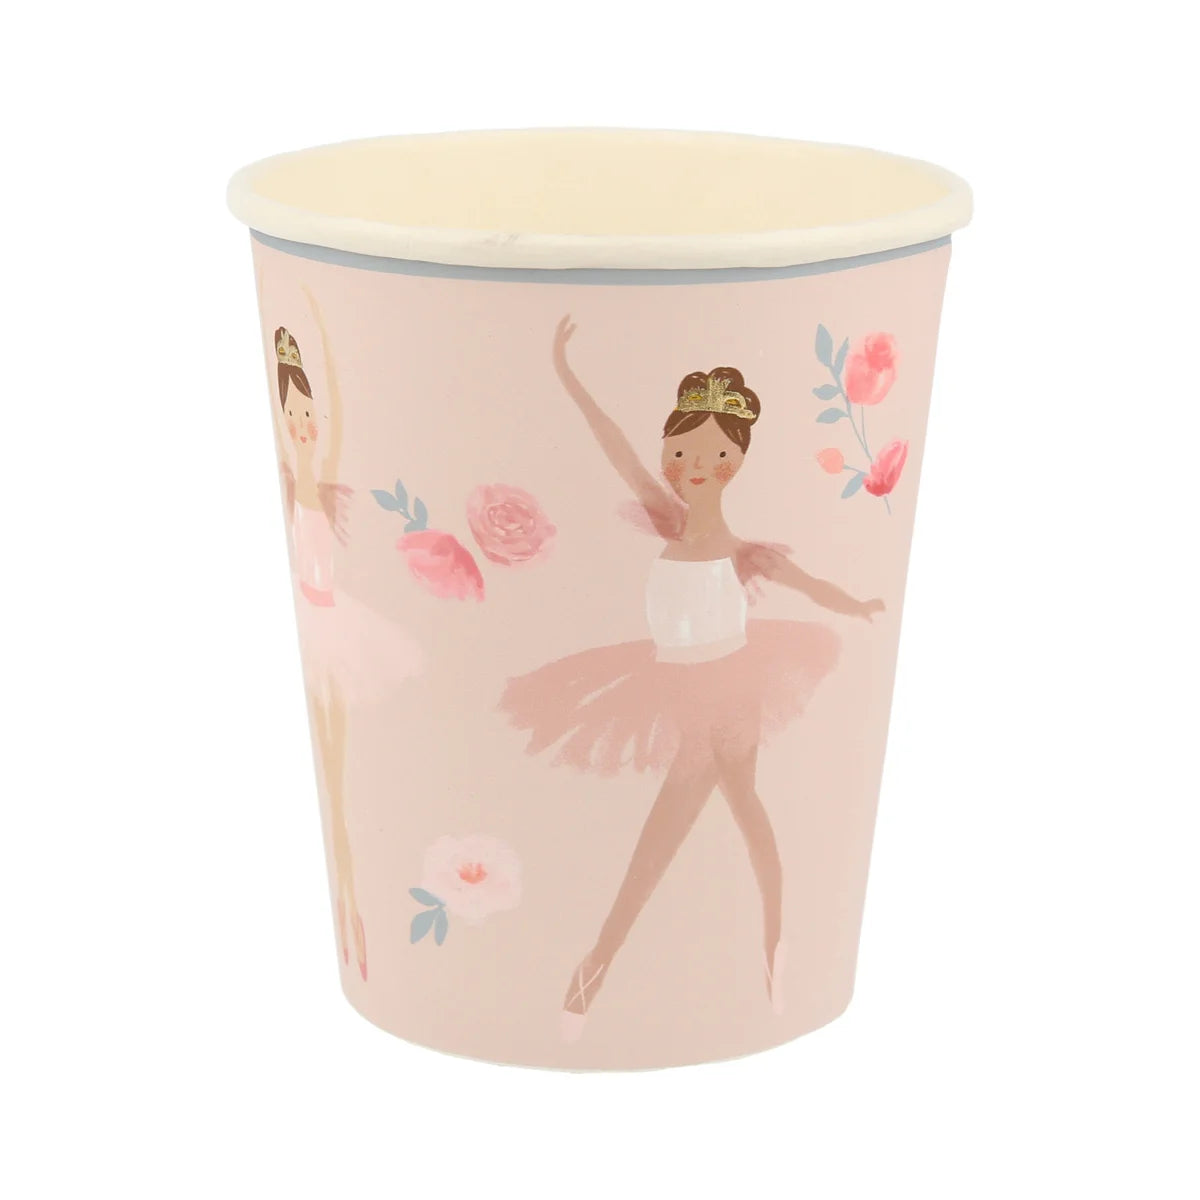 Ballerina cups in pink sold at ALittleConfetti, By Meri Meri